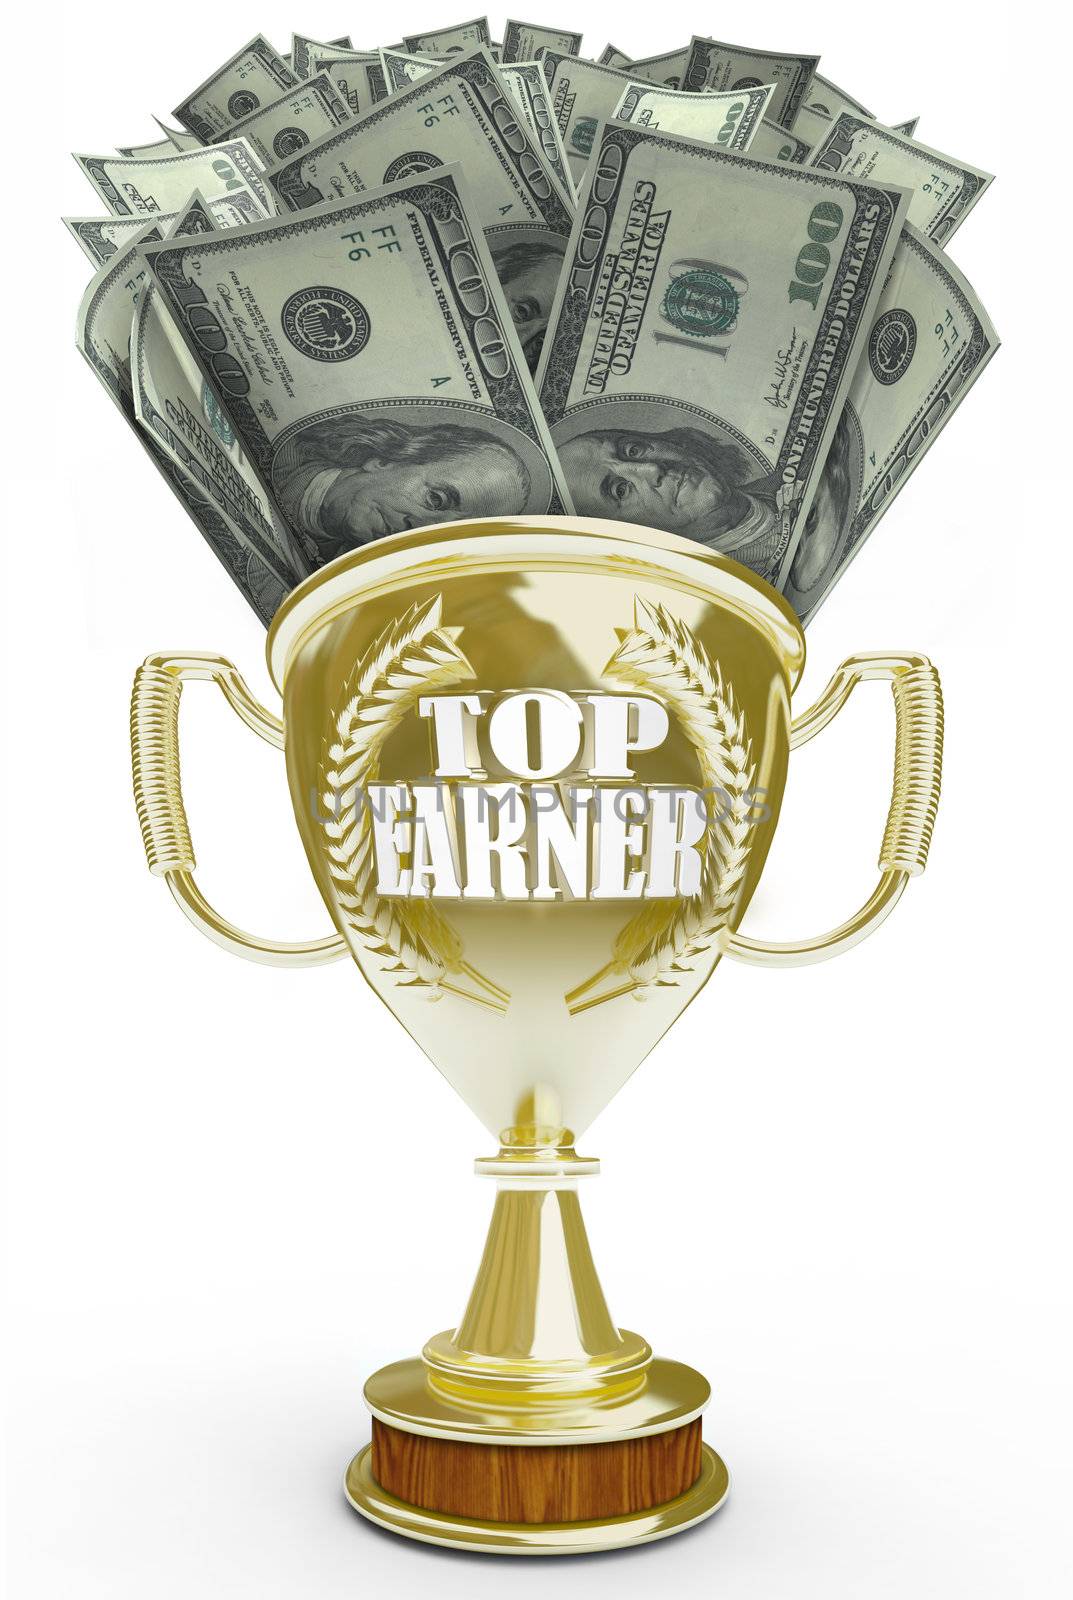 Top Earner - Cash in Golden Trophy by iQoncept